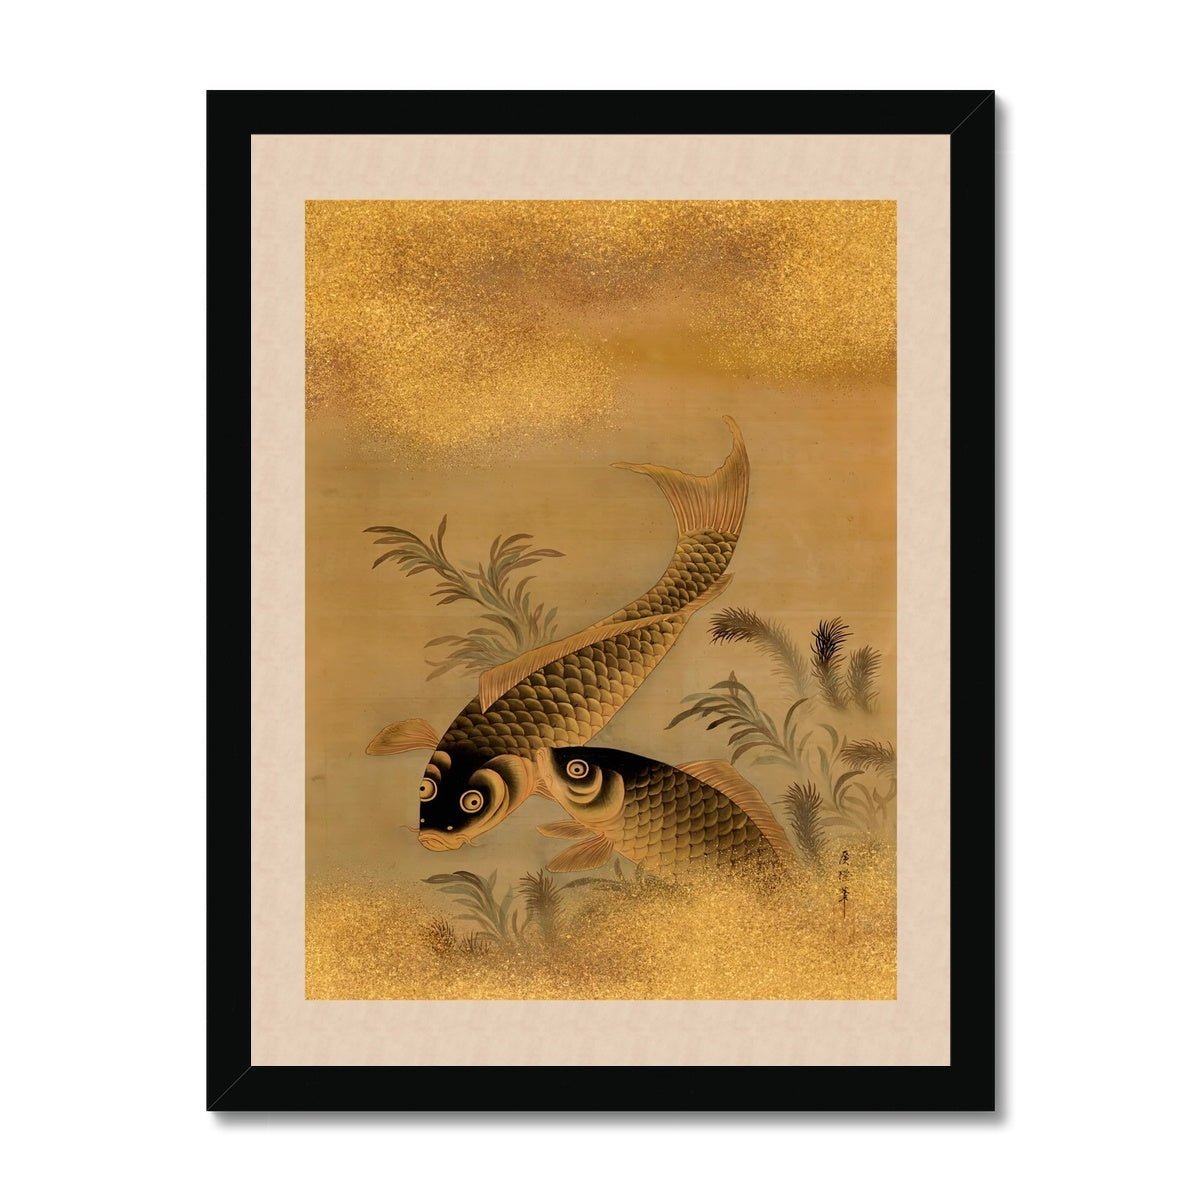 Fine art 6"x8" / Black Frame Koi and Water Plants Antique Japanese 19th-Century Zen Scroll Gold Carp Marine Life Aquatic Nature Framed Fine Art Print